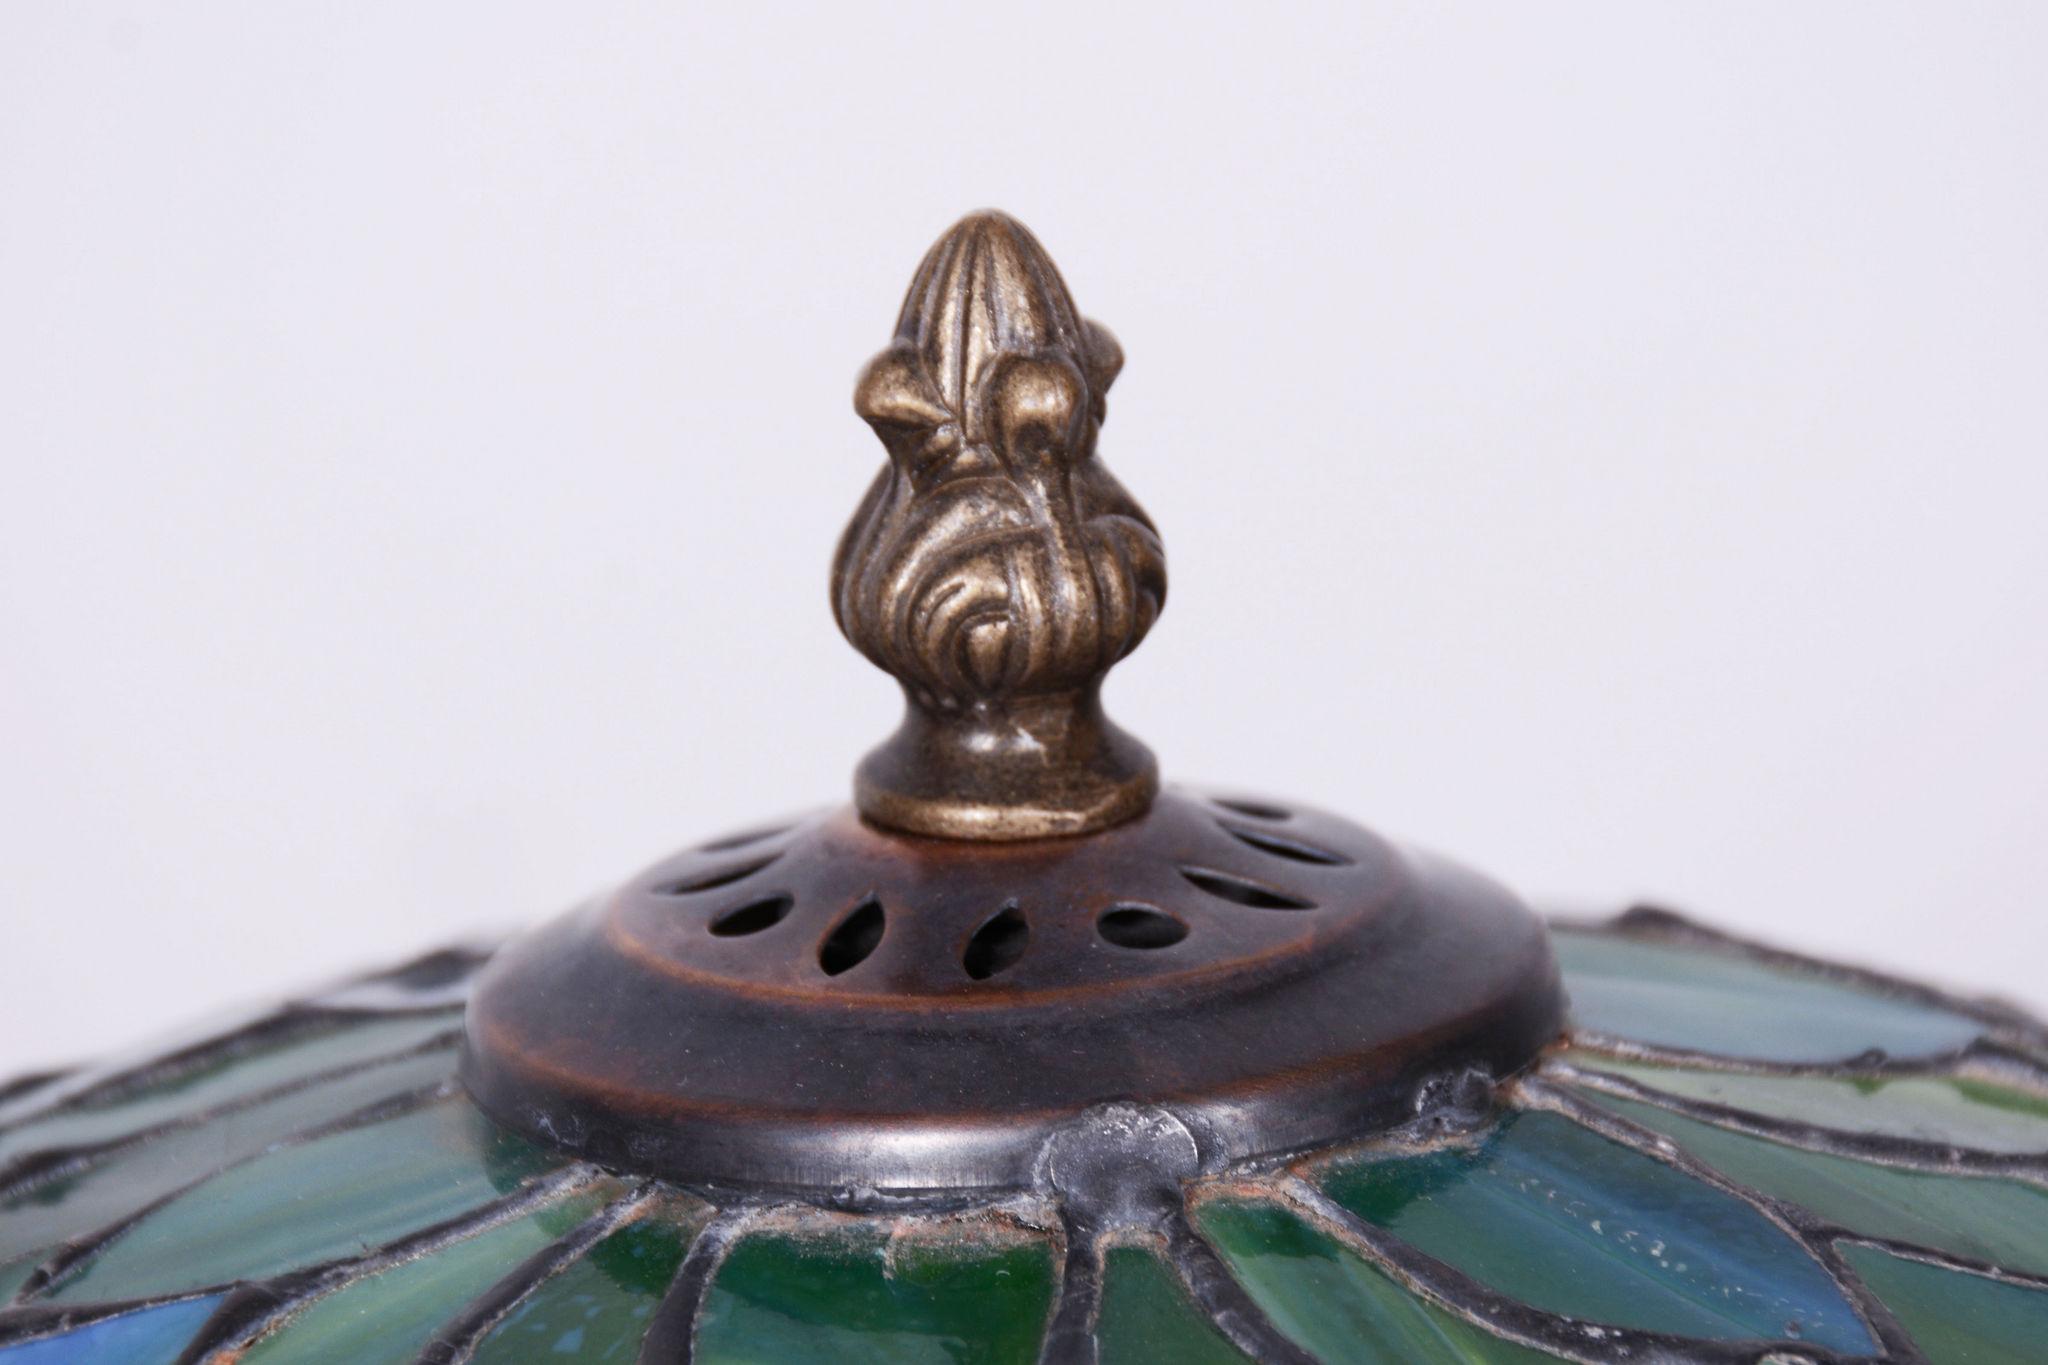 Original Art Deco Table Lamp, Enameled Bronze, Glass Shade, France, 1970s For Sale 5